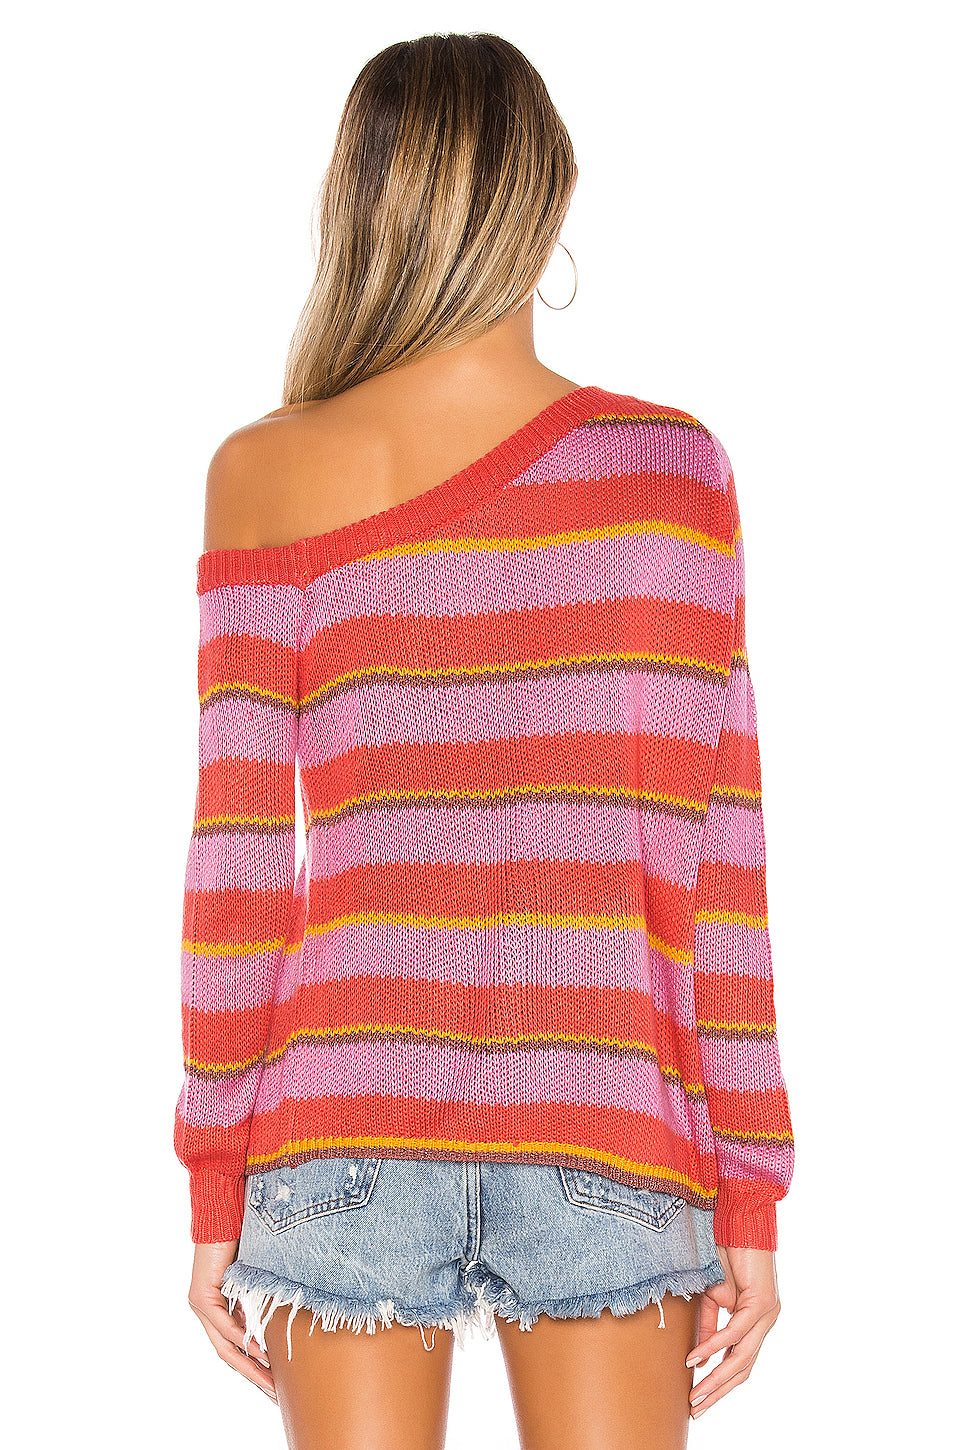 Dorado Sweater in PINK STRIPE